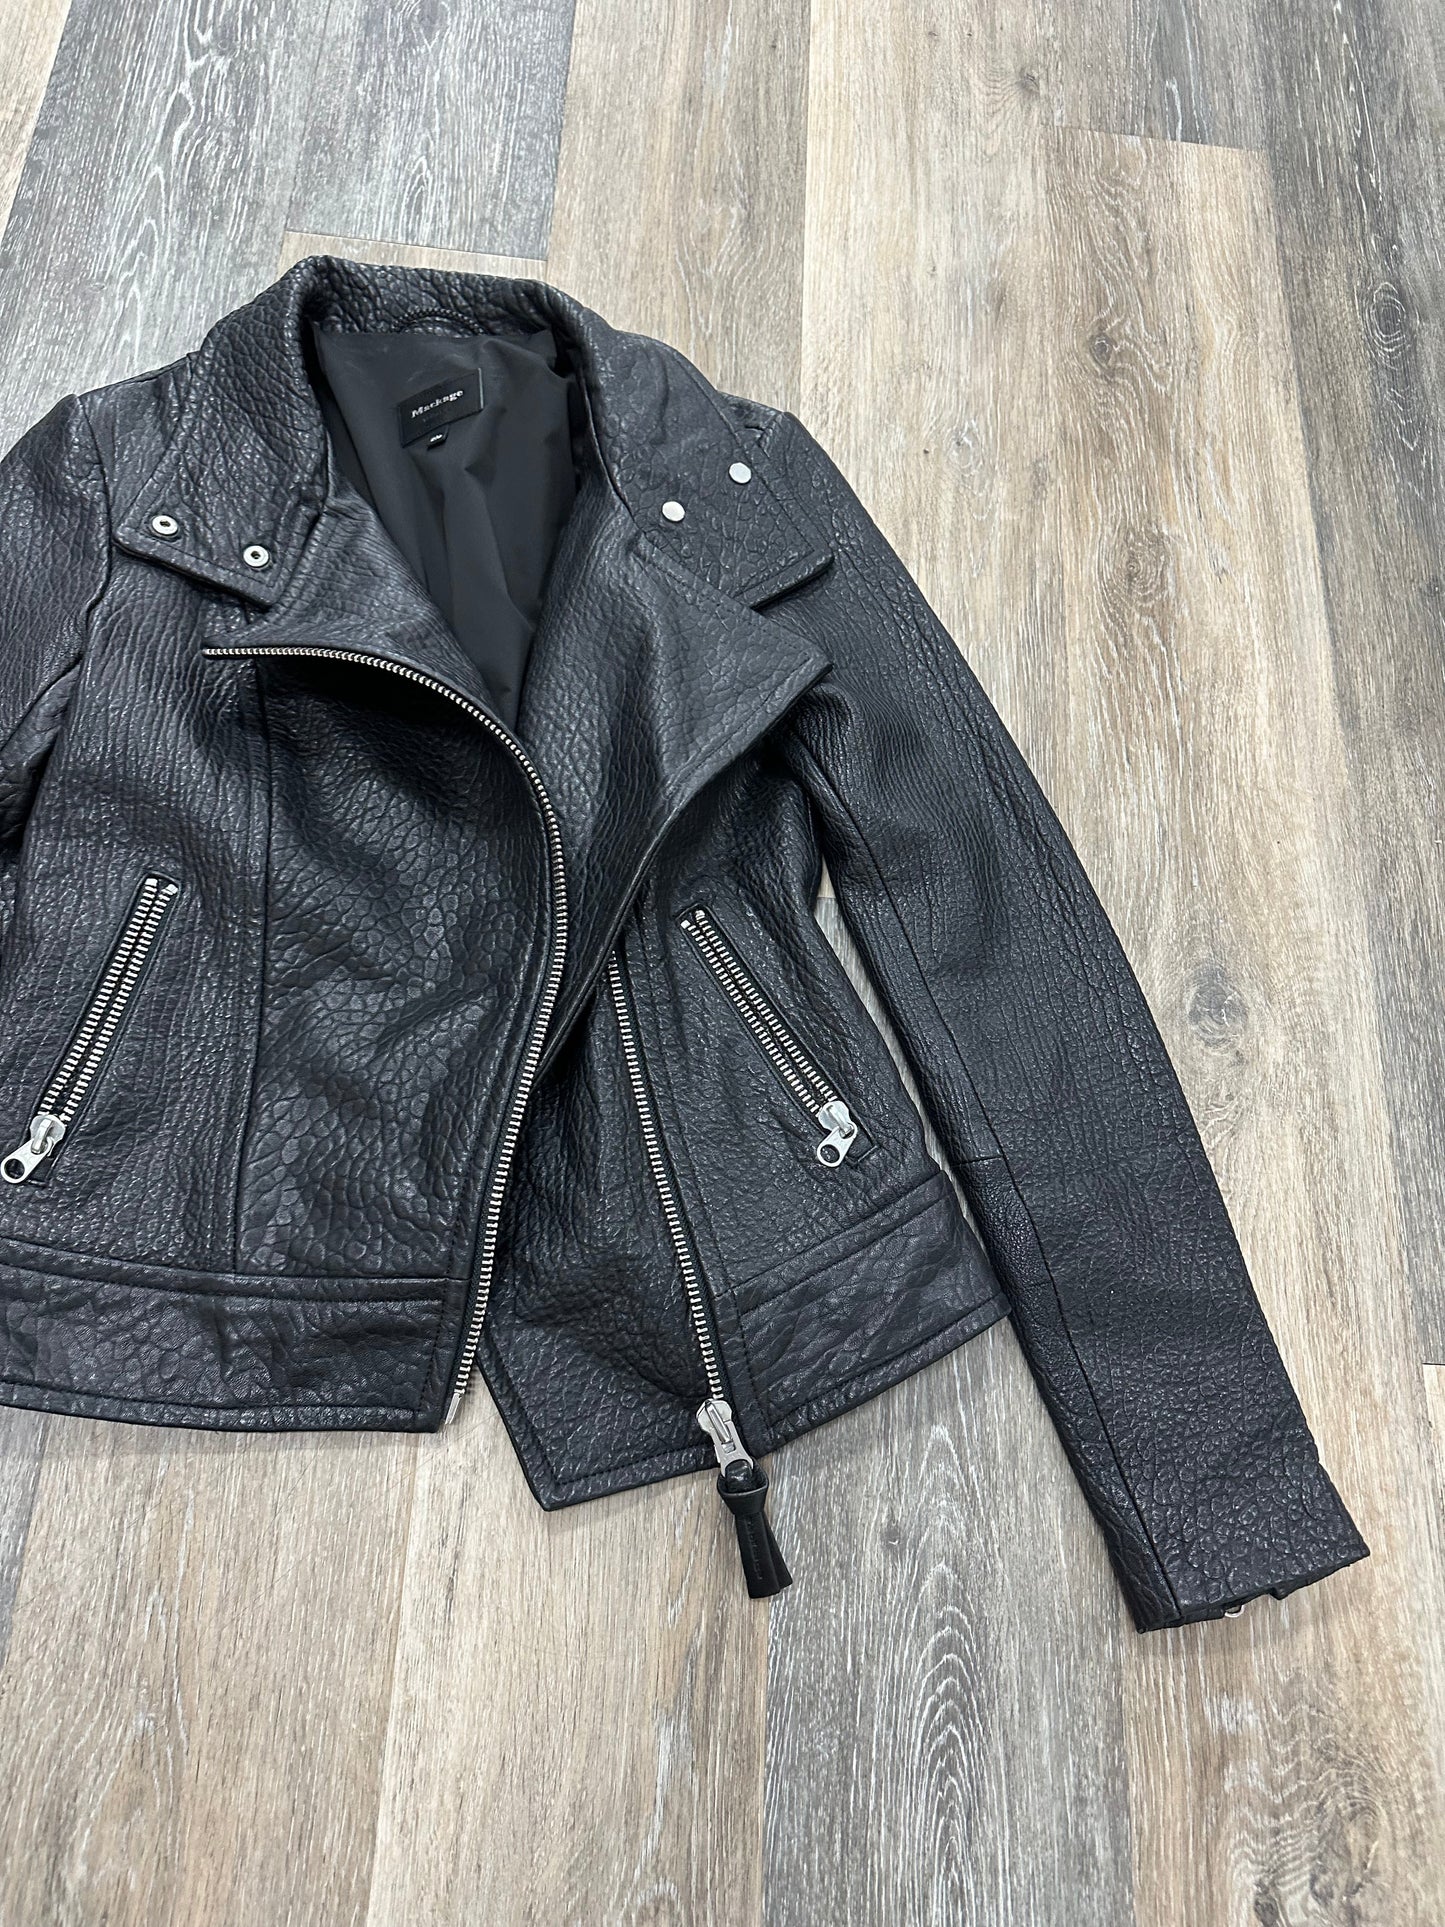 Jacket Designer By Mackage  Size: Xs